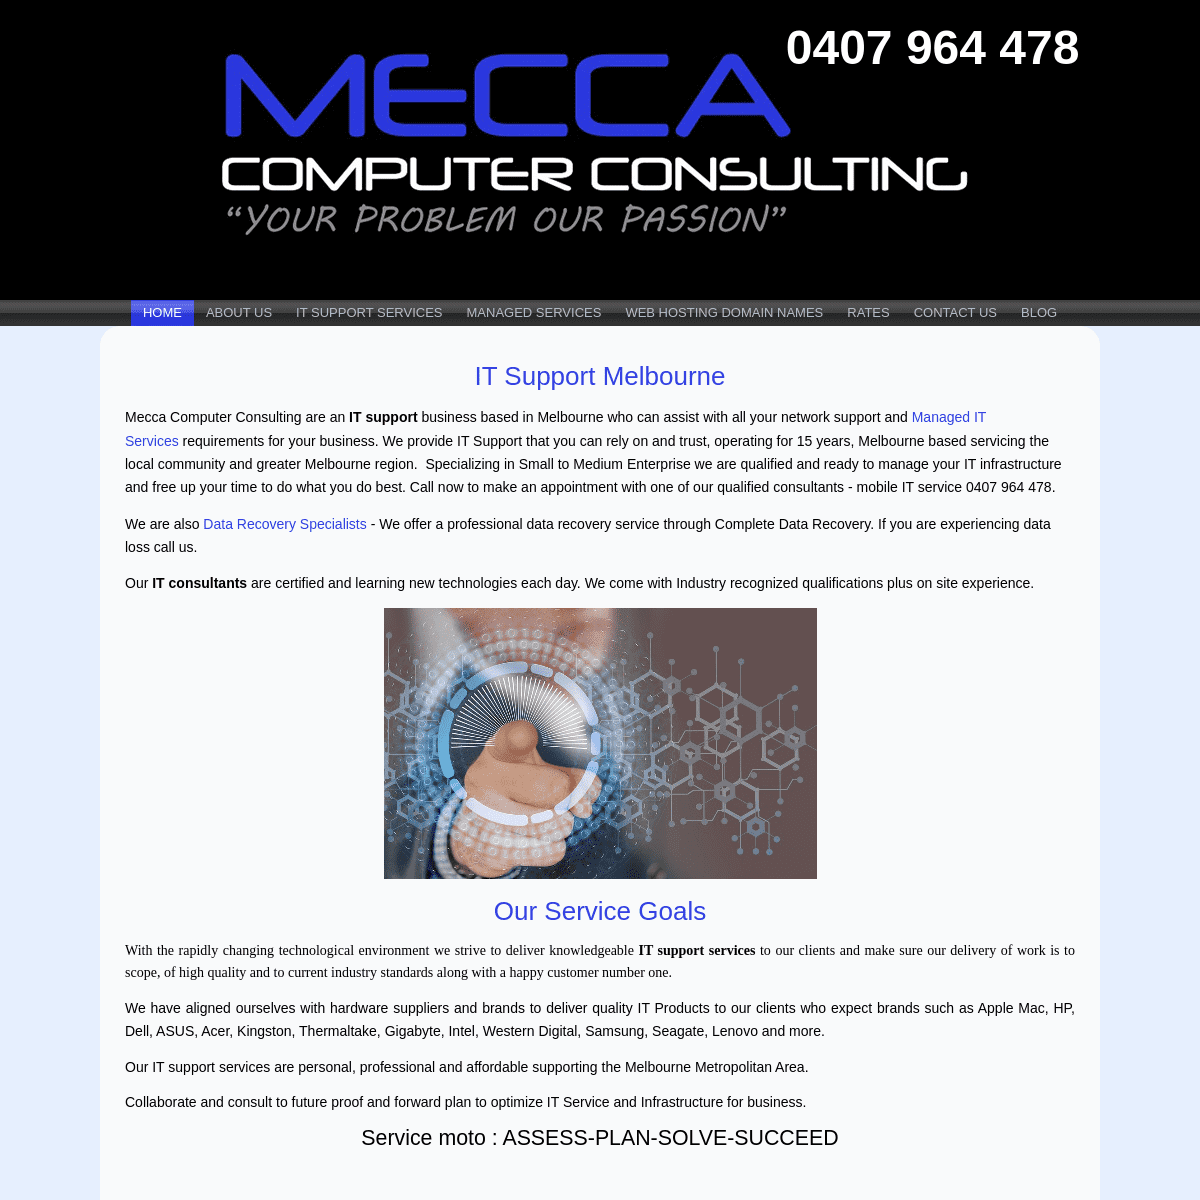 A complete backup of meccacomputers.com.au